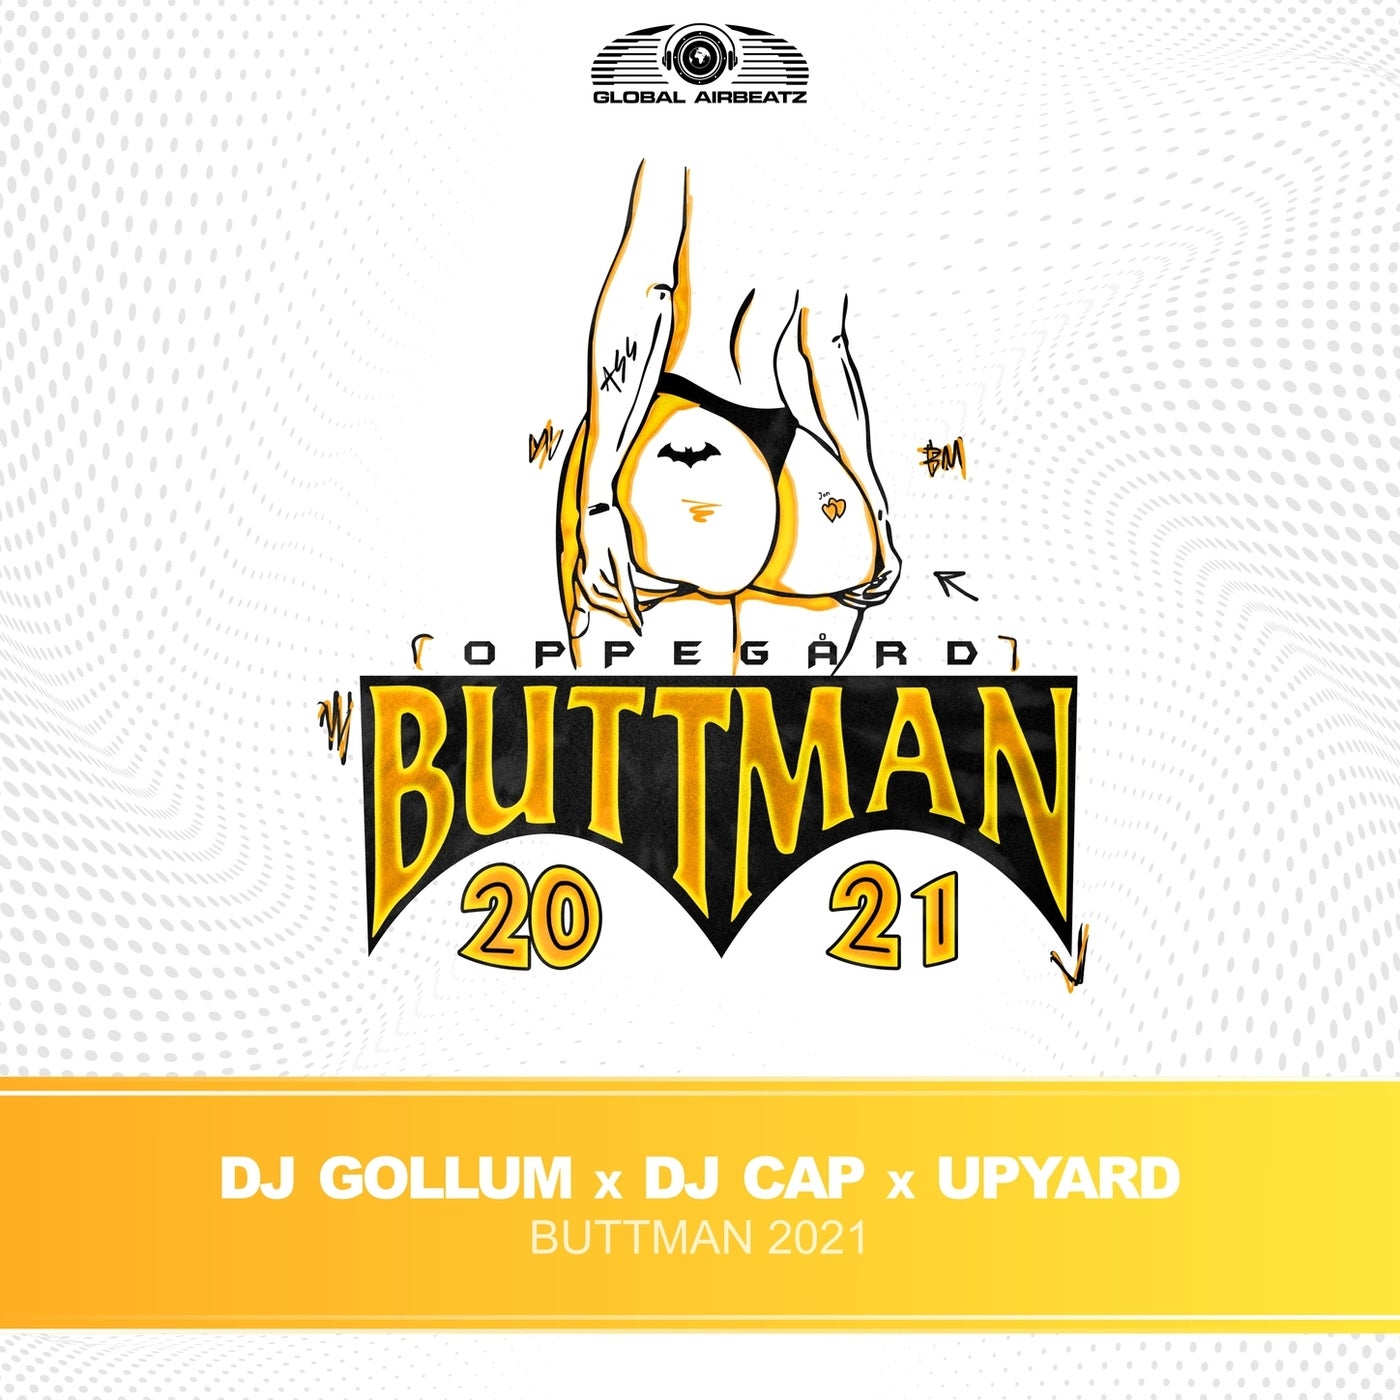 DJ Gollum x DJ Cap x Upyard - Buttman 2021